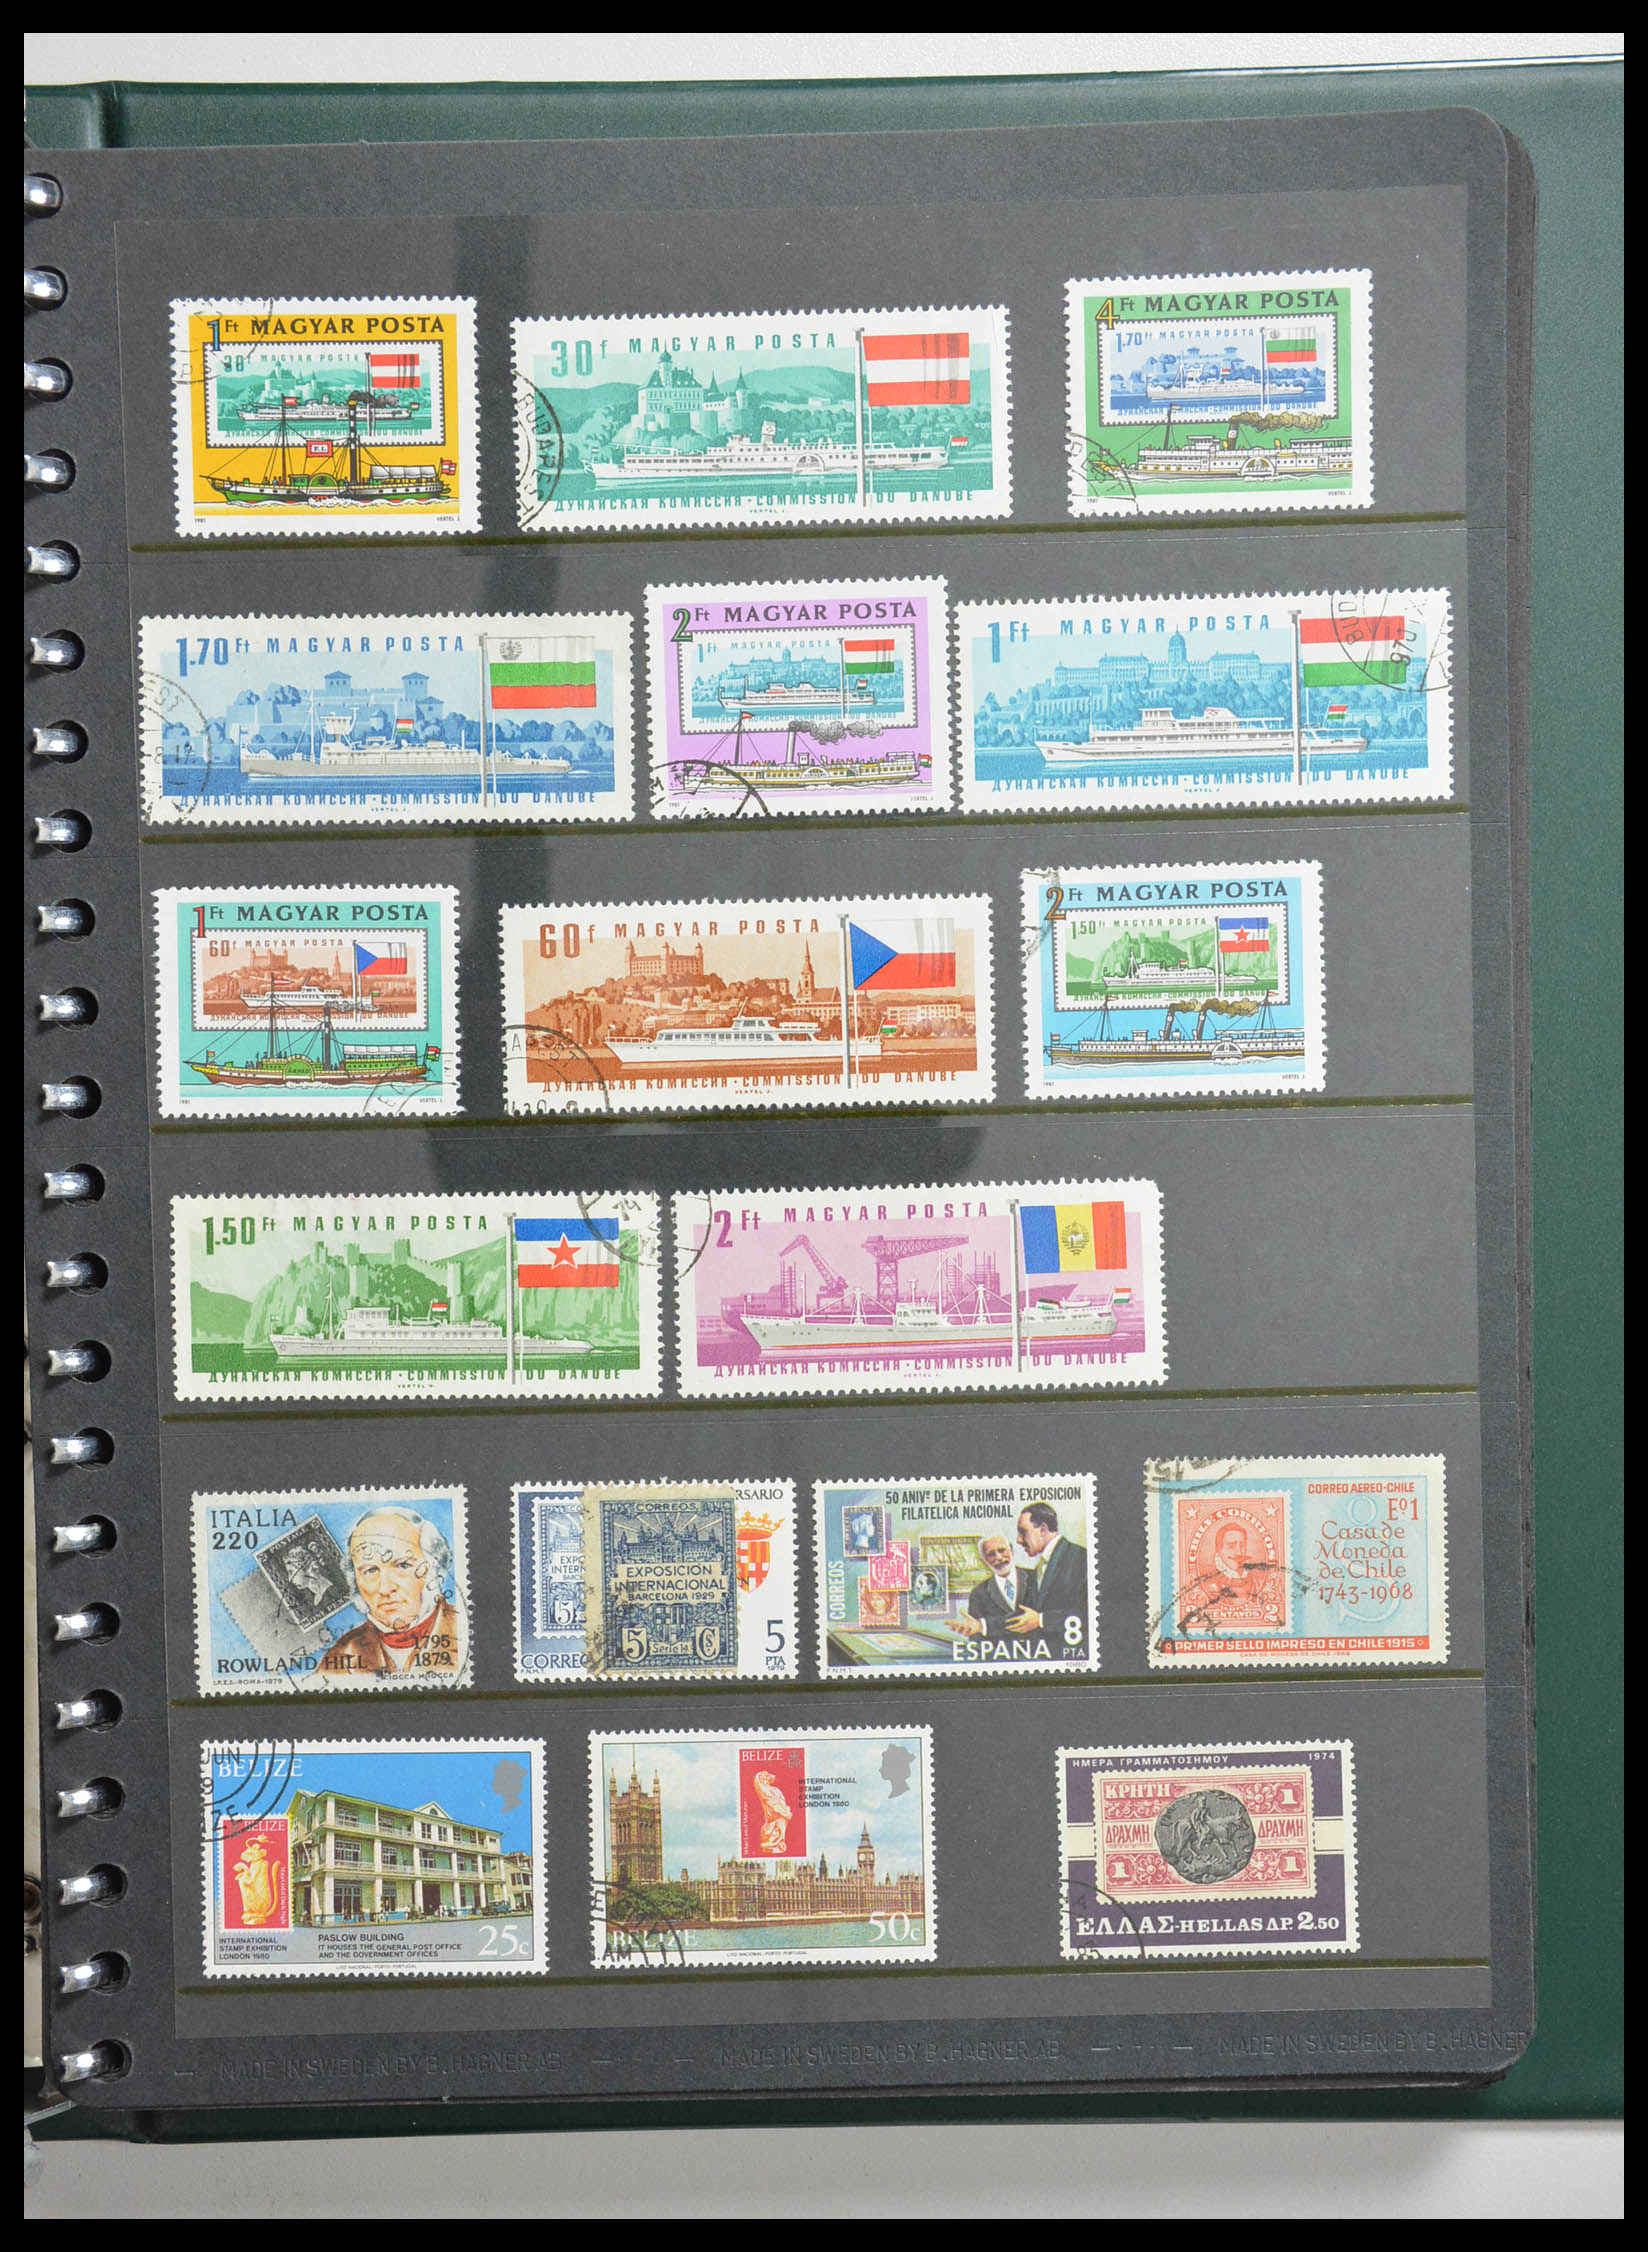 28337 017 - 28337 Postzegel op postzegel 1840-2001.